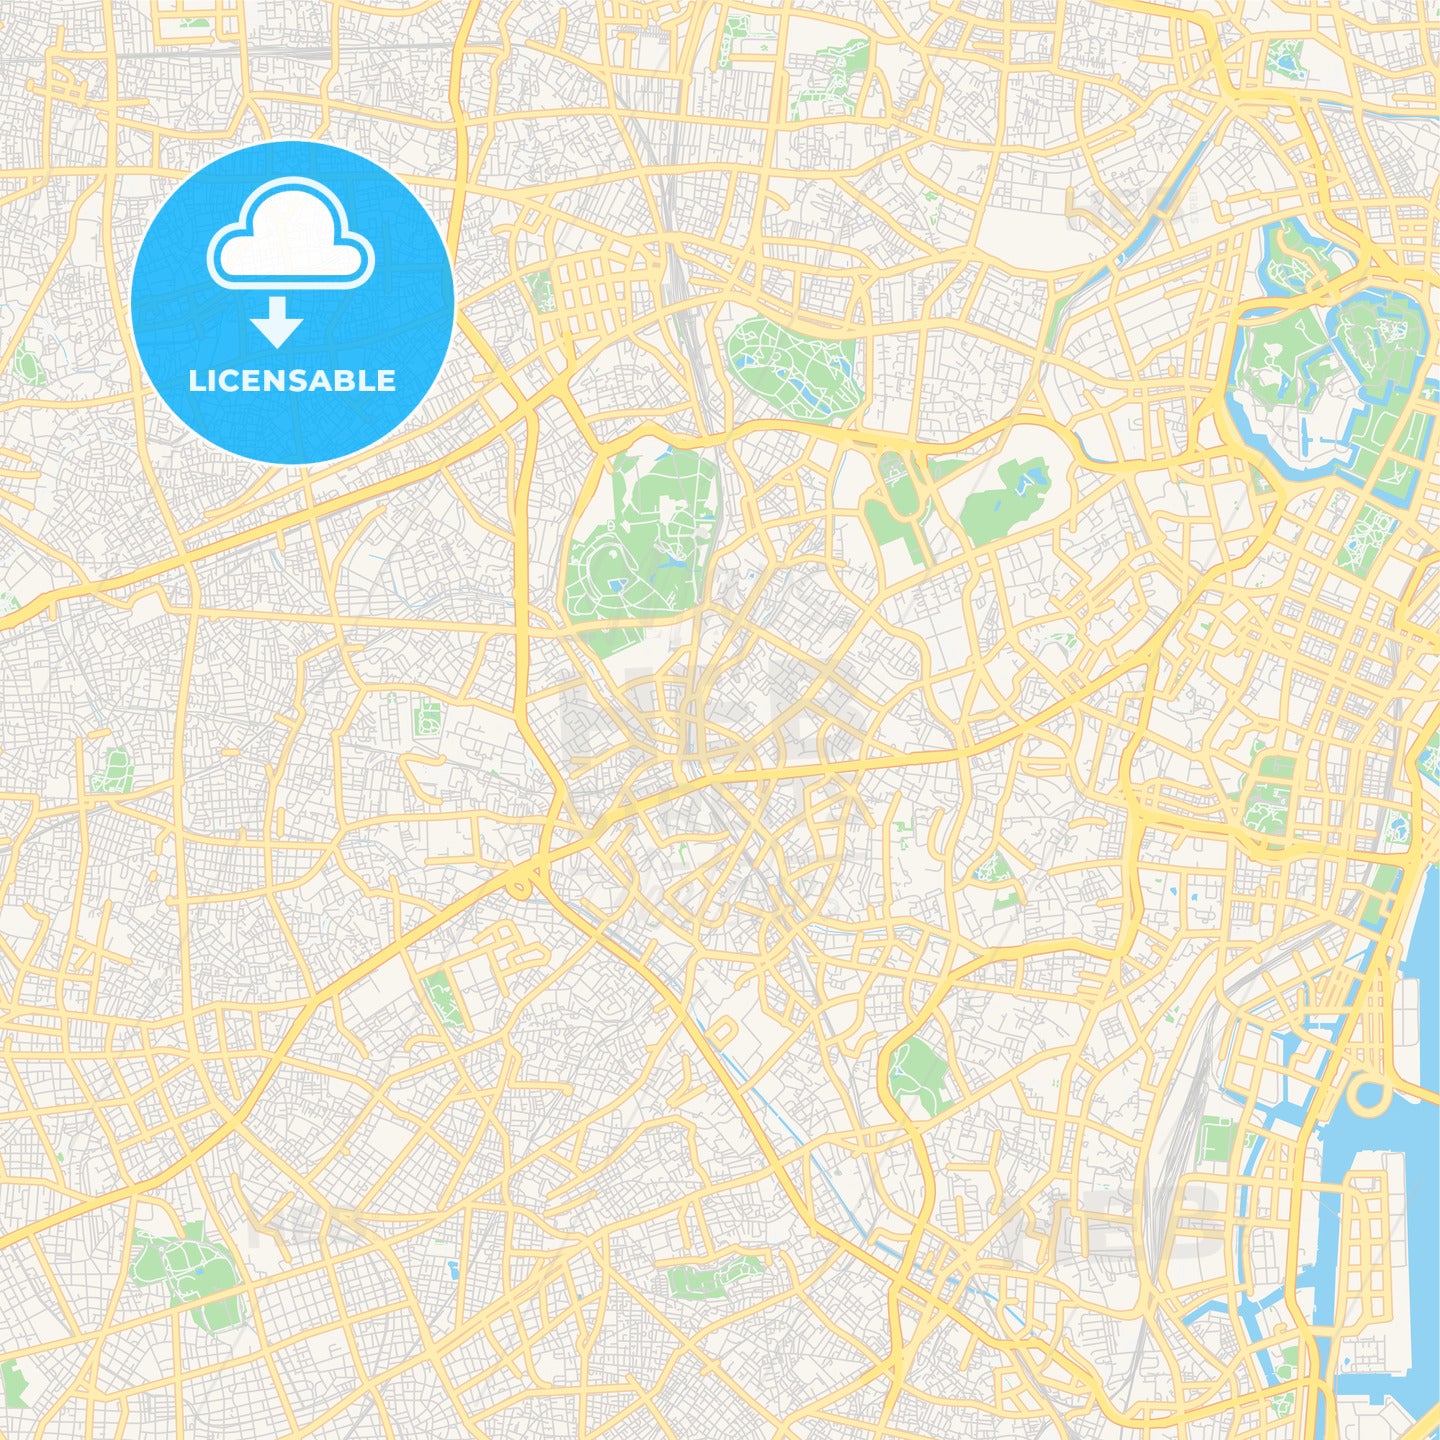 Printable street map of Shibuya, Japan